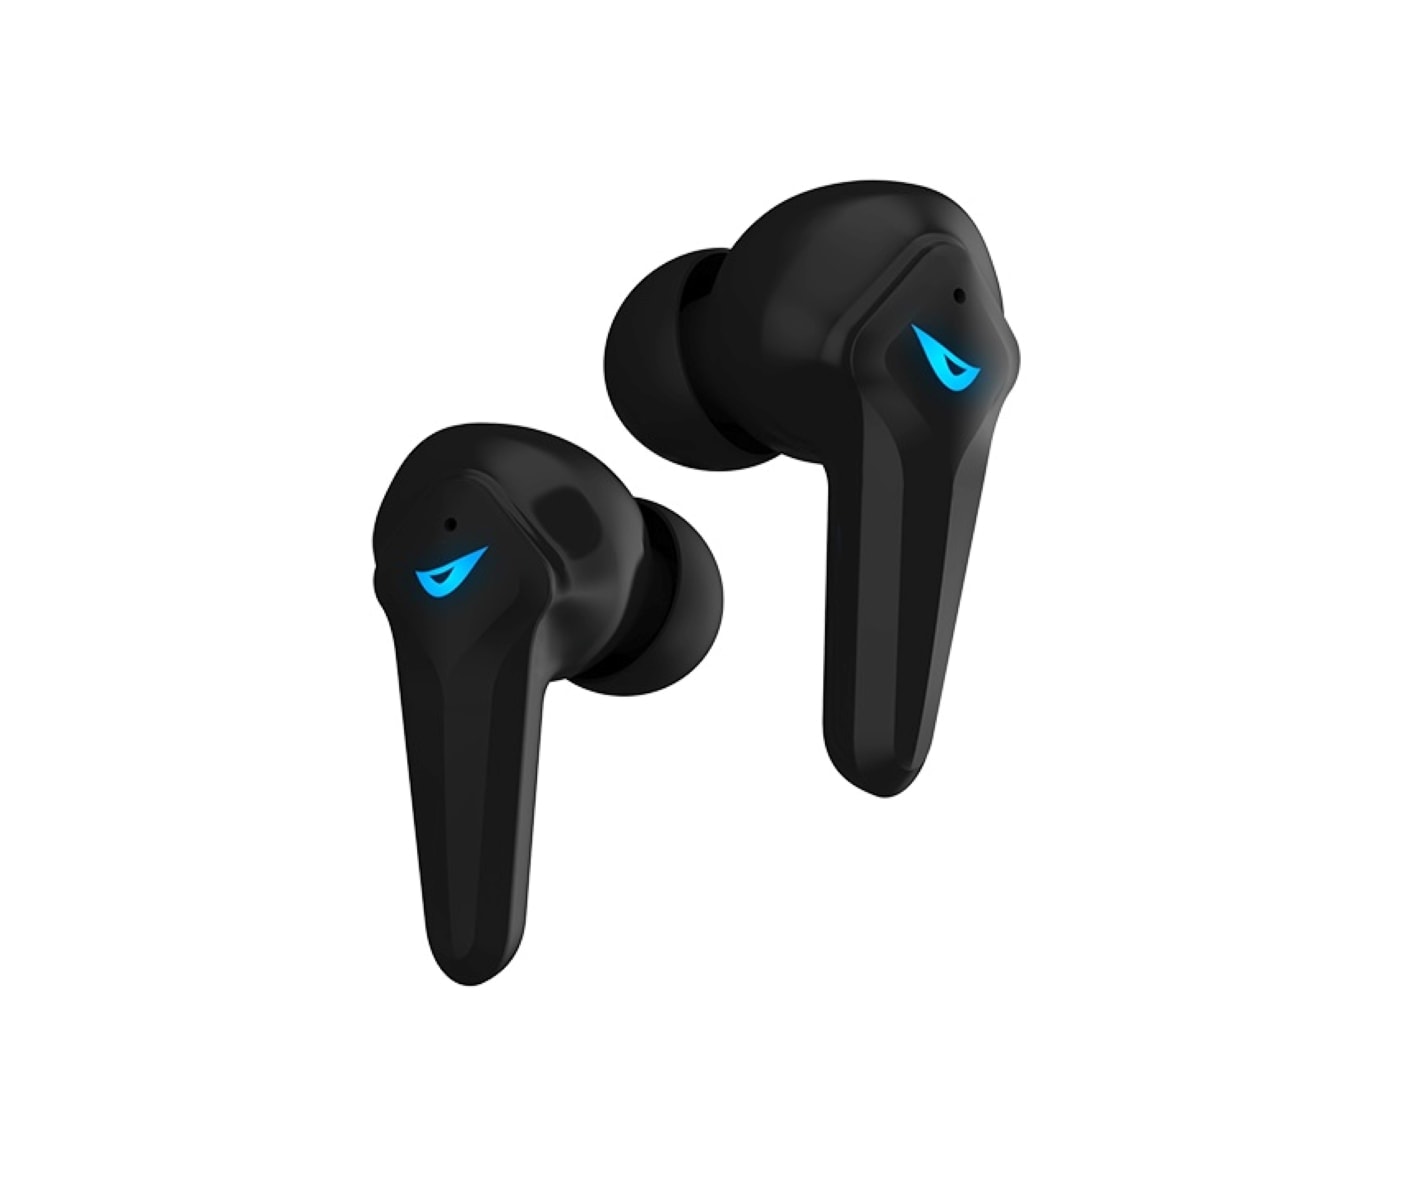 Sades In-Ear-Kopfhörer »Wings 200 TW-S02«, kabellos, Stereo, mit Mikrofon, Bluetooth 5.0, automatische Kopplung